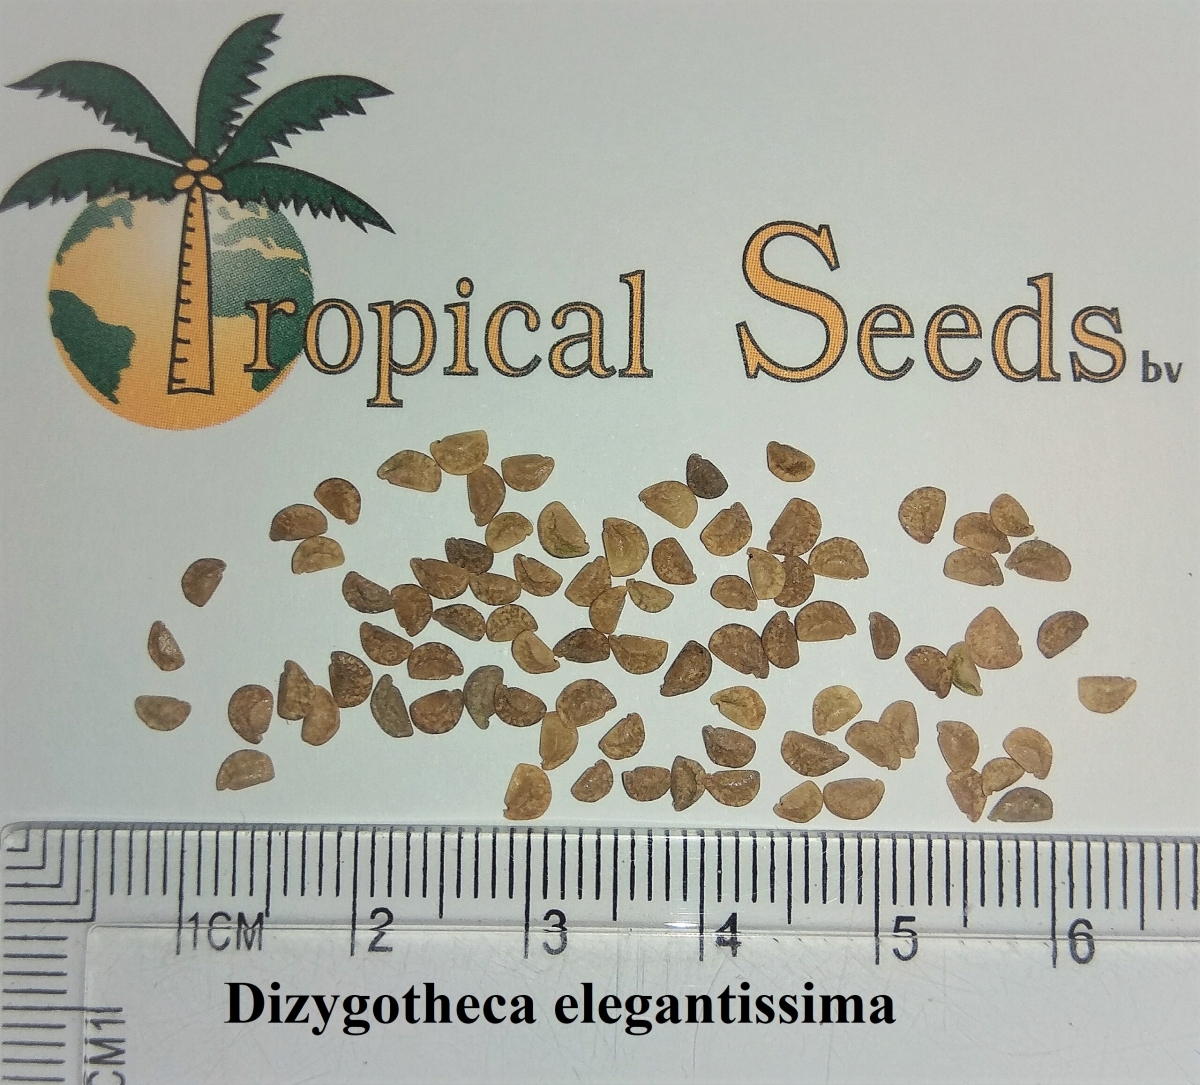 Dizygotheca elegantissima Seeds